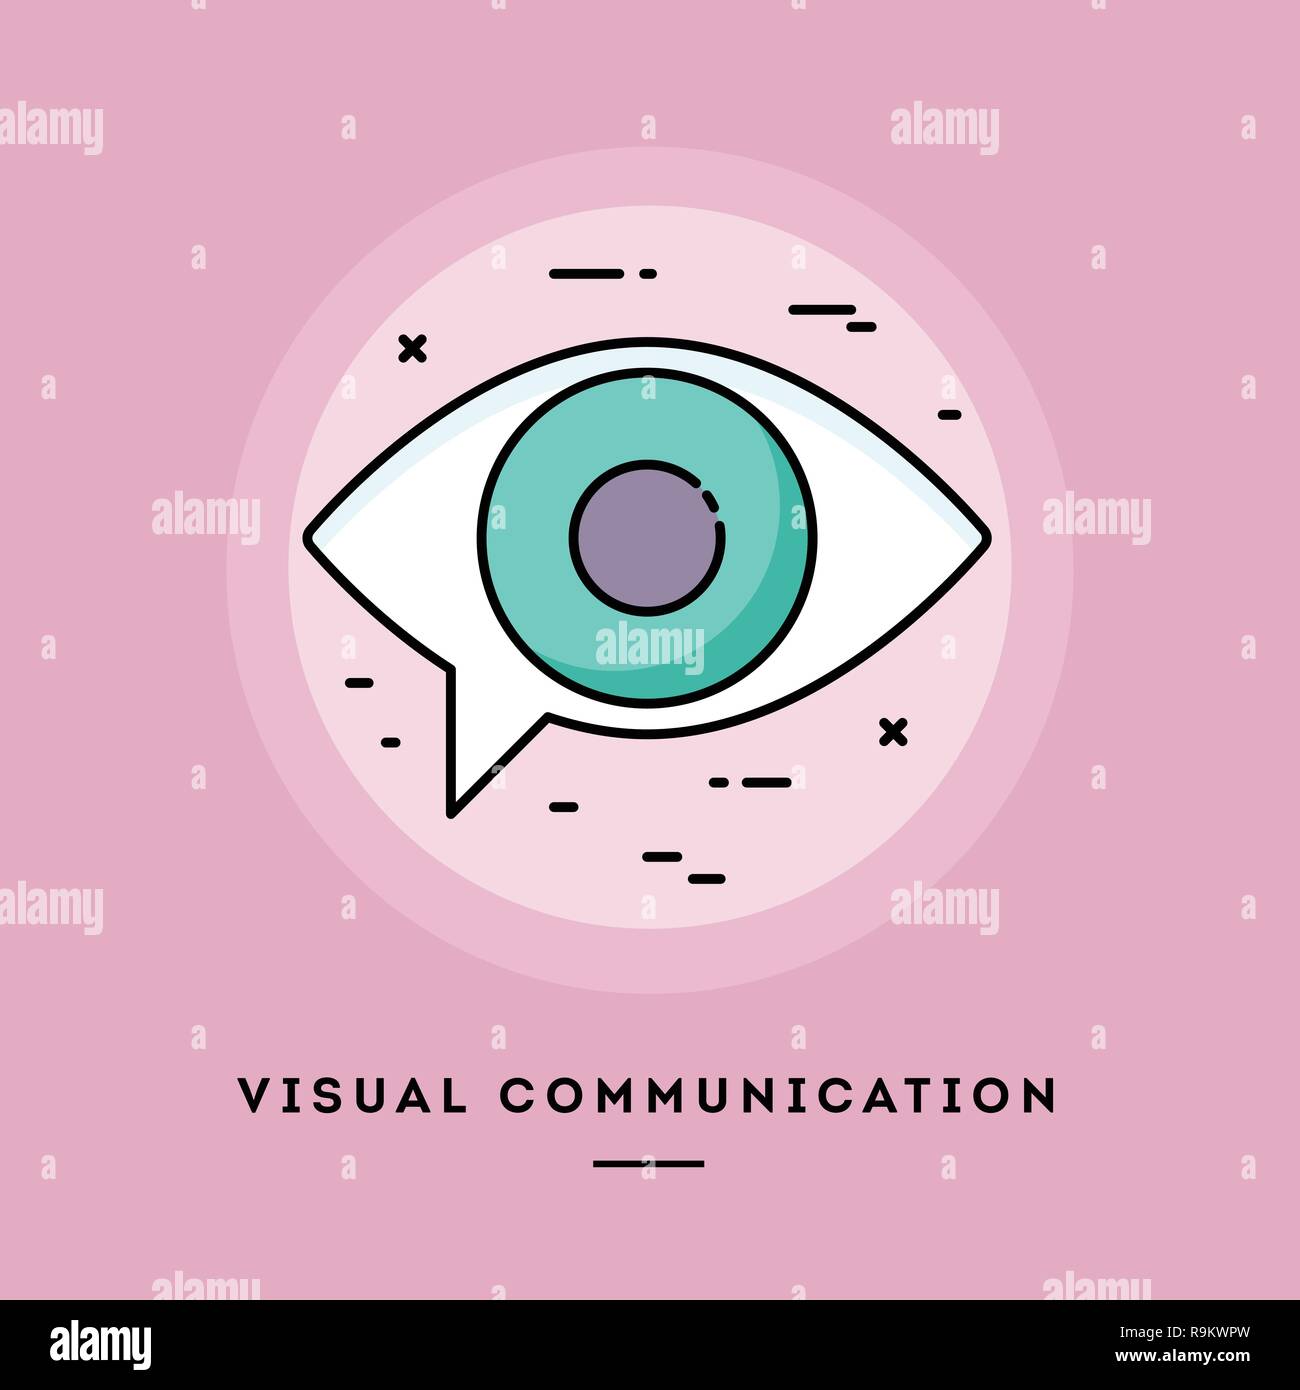 Visual Communication Flat Design Thin Line Banner Vector Illustration